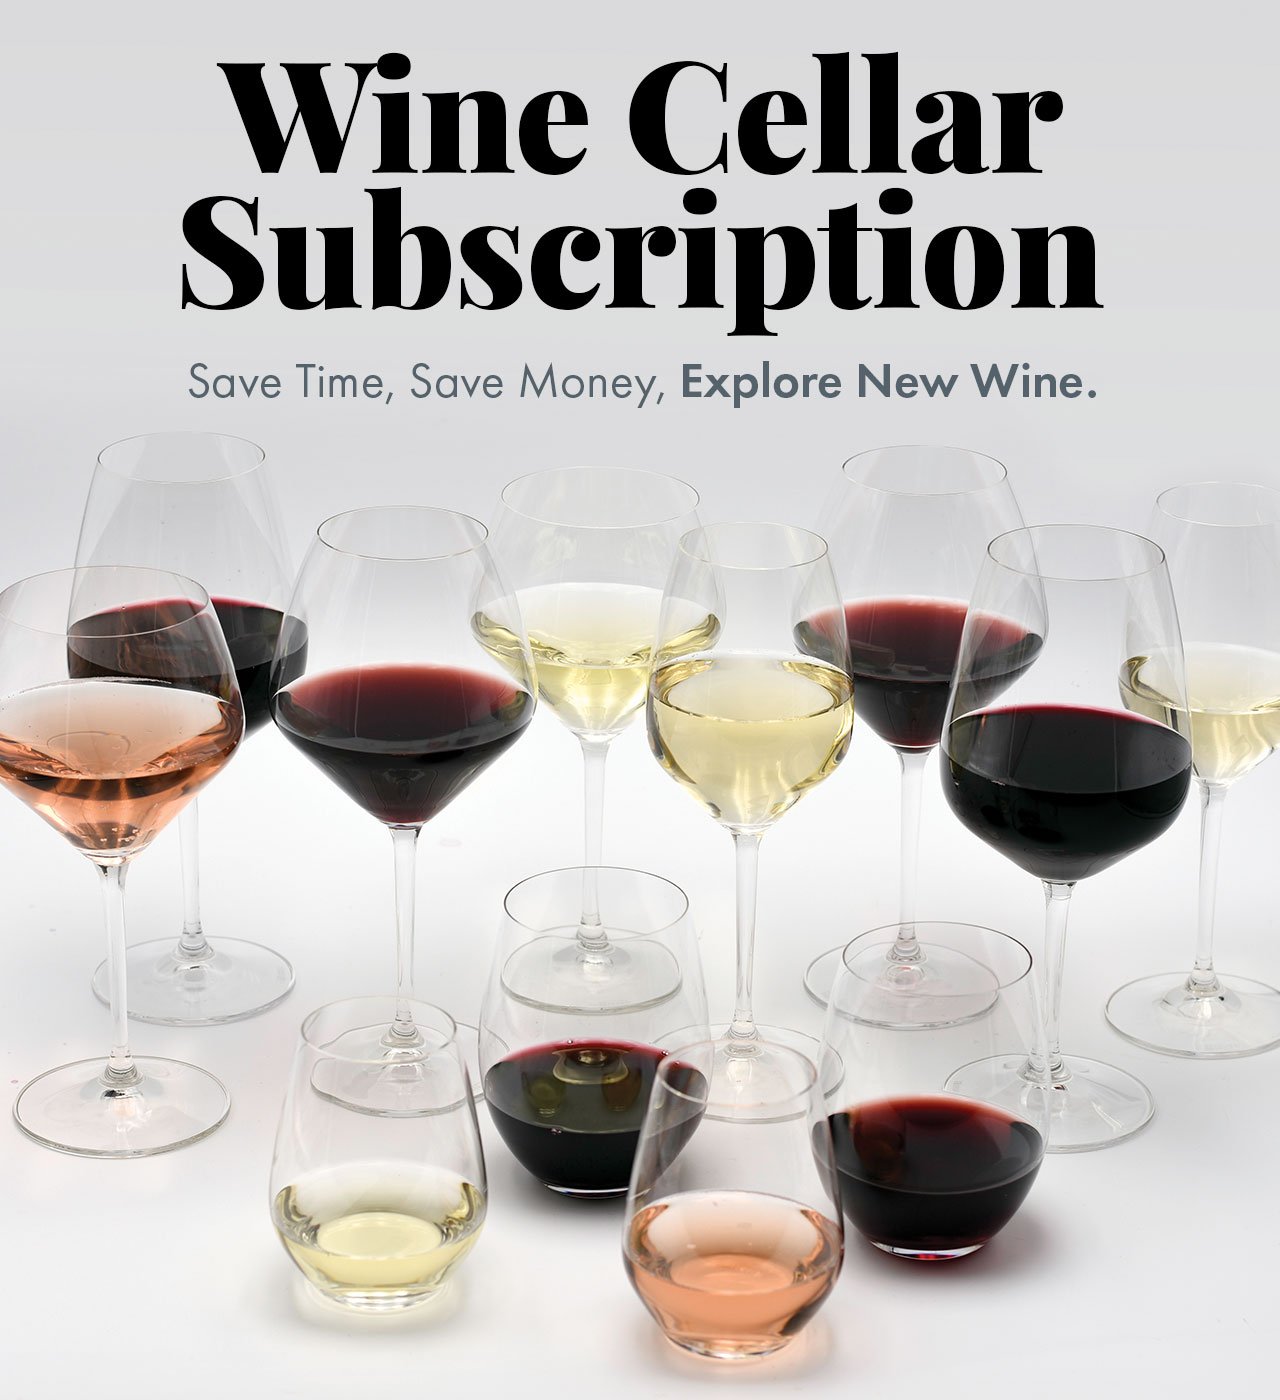 Wine Cellar Subscription Save Time, Save Monday, Explore New Wine.